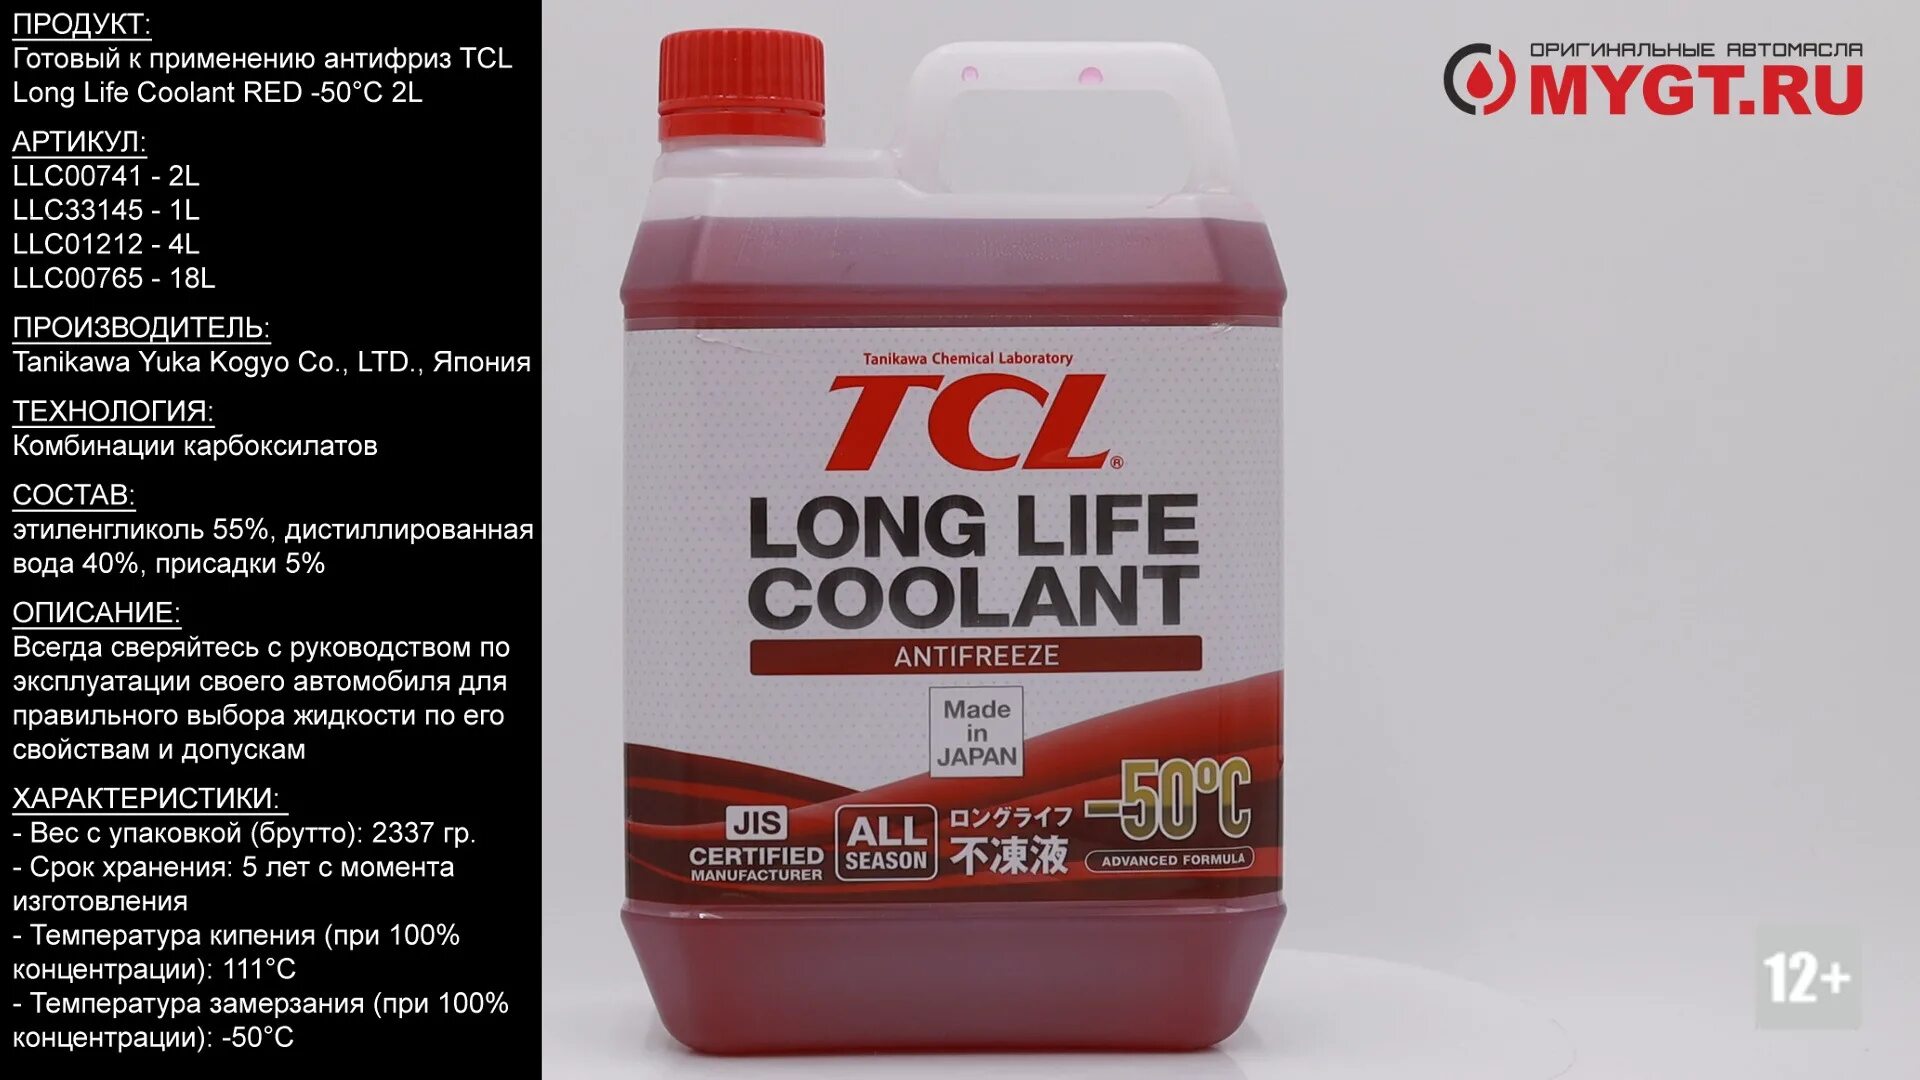 Long life coolant red. TCL LLC антифриз -40 Red 2l. Антифриз TCL LLC (long Life Coolant) -50. Антифриз TCL LLC Red -50. Антифриз TCL красный -50.